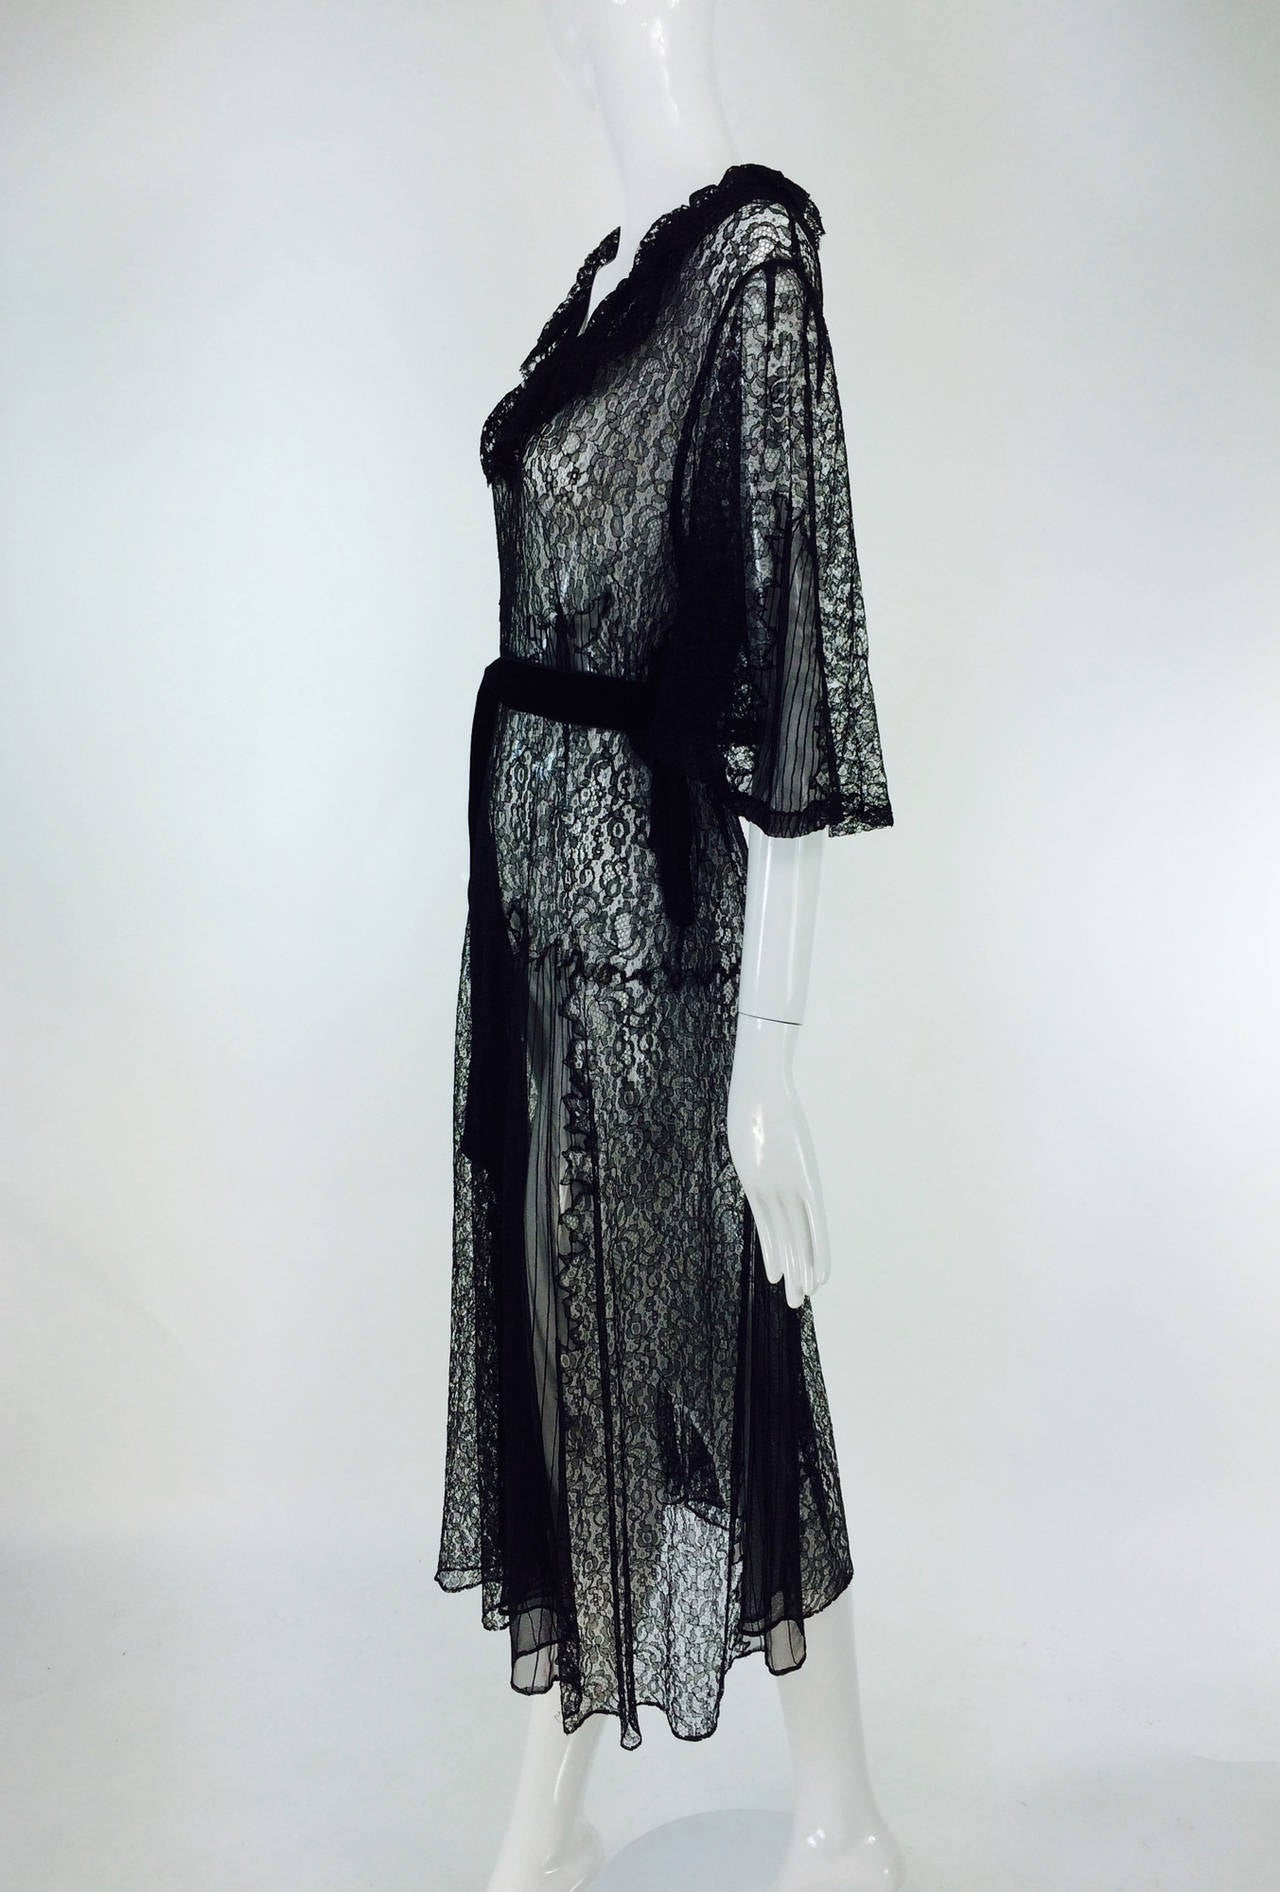 Black lace & chiffon dress from the 1940s 4